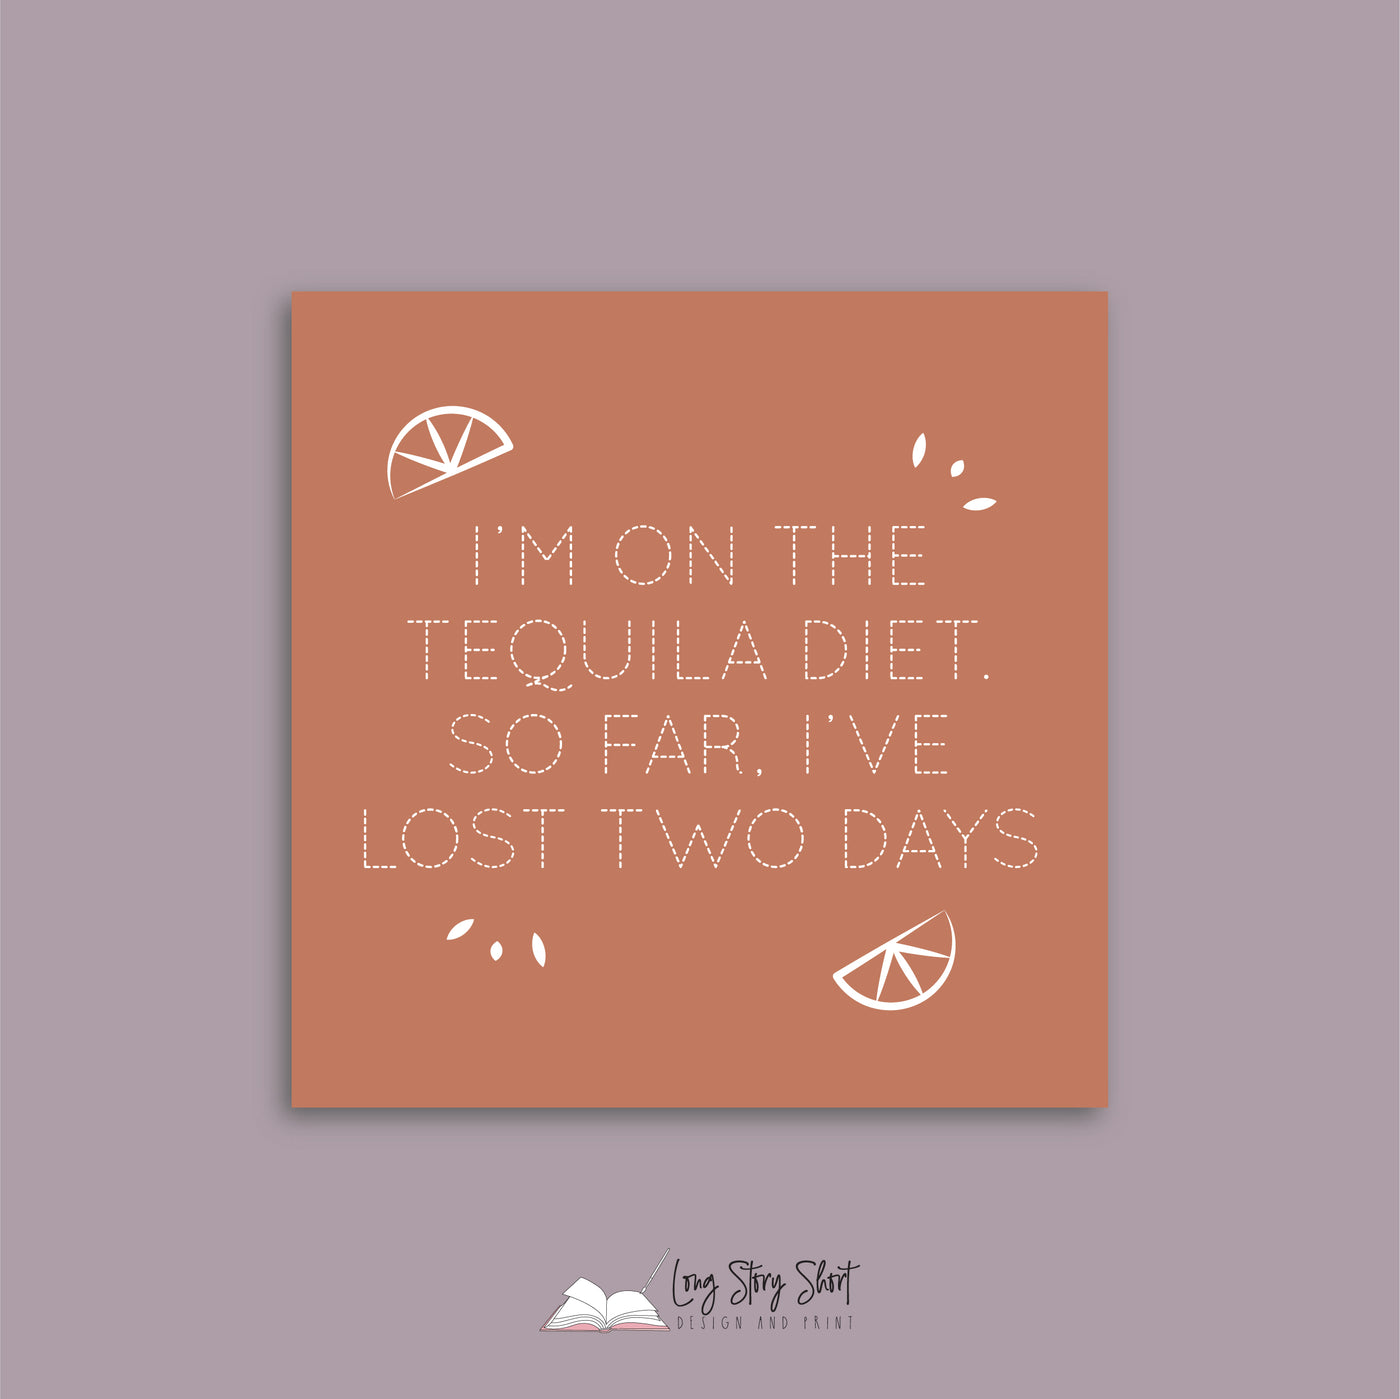 Tequila Diet Vinyl Label Pack